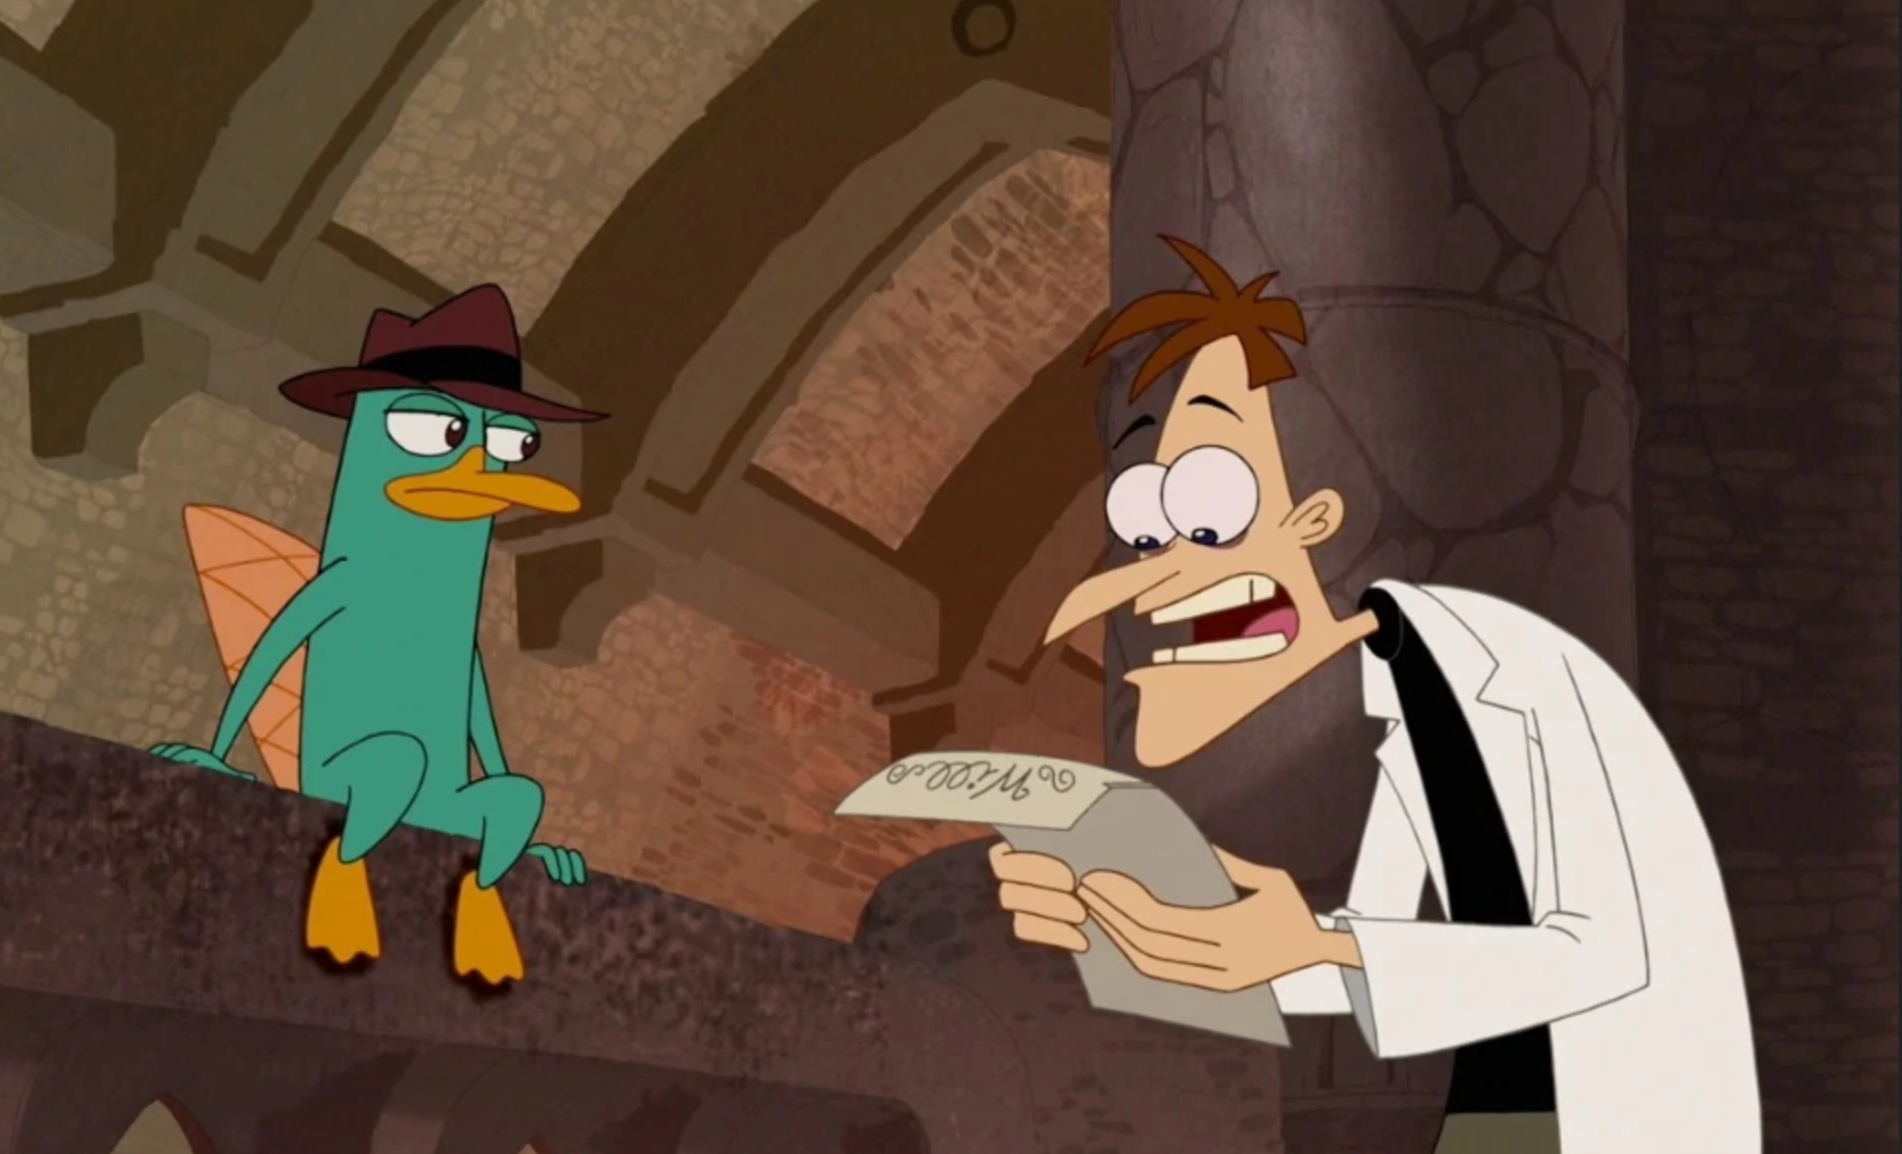 Doofenshmirtz reading to Perry the platypus